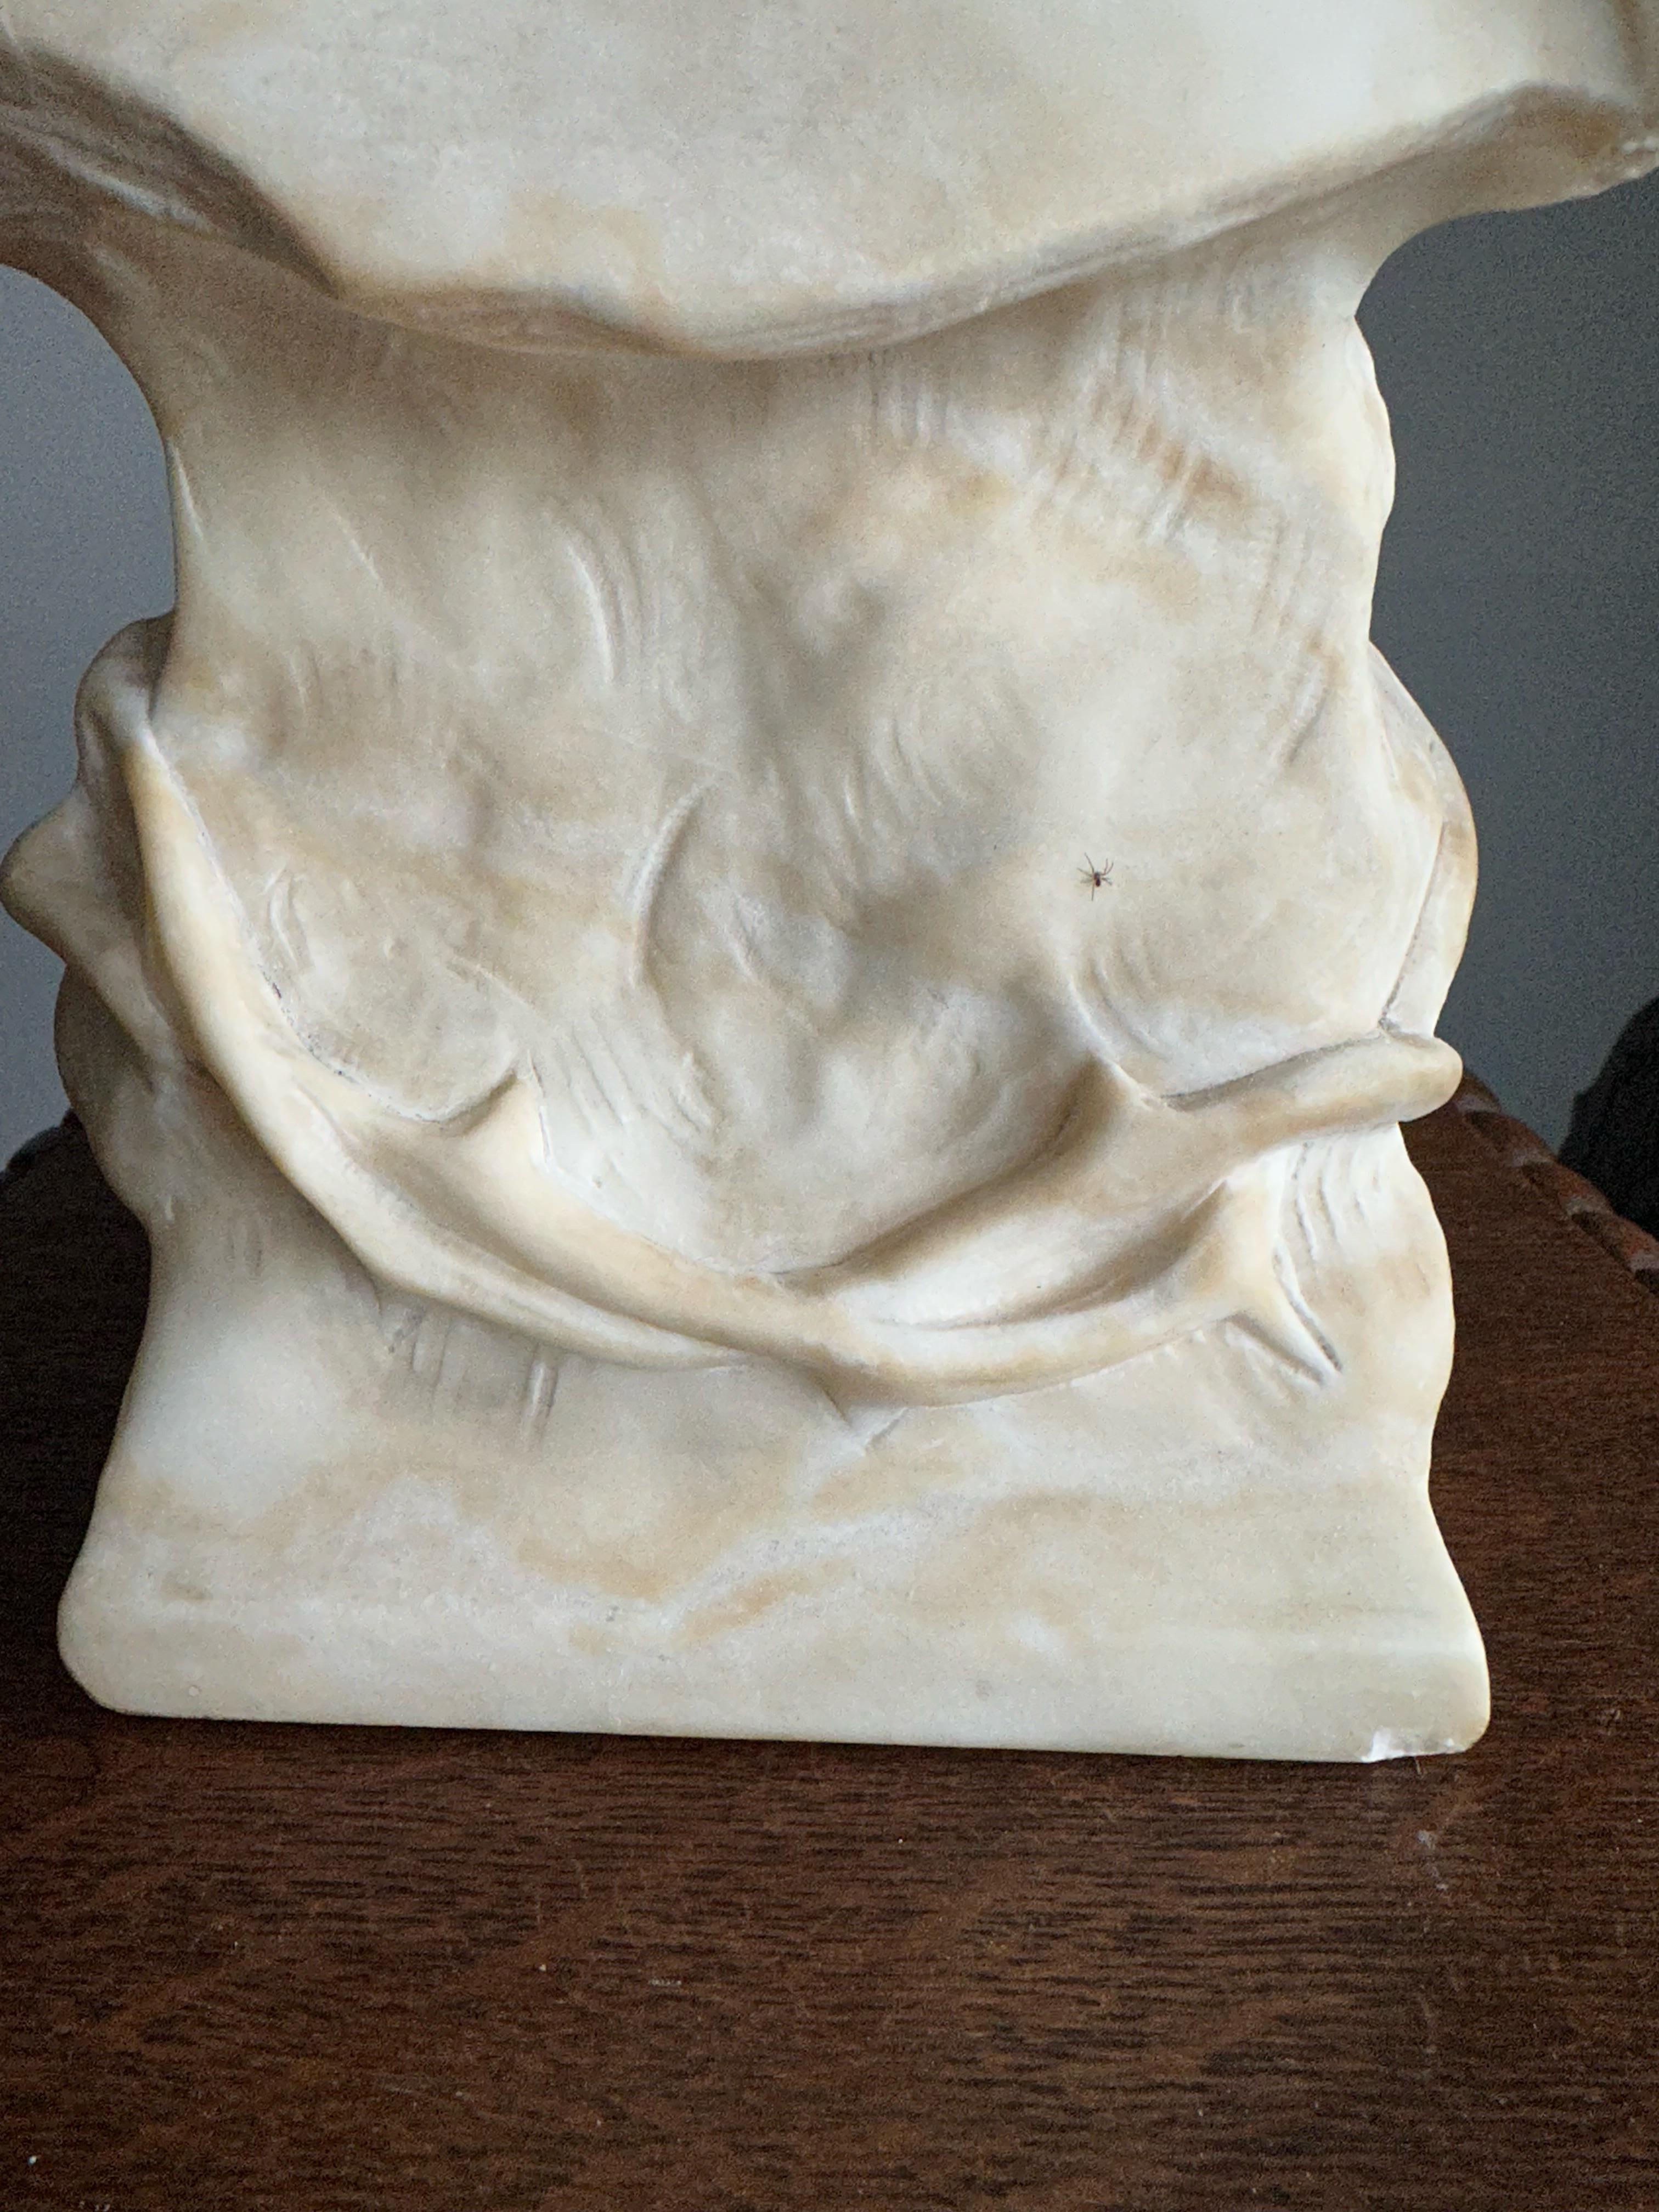 Antique, Early 1900 Large Hand Carved Alabaster Sculpture / Bust of Jesus Christ For Sale 5